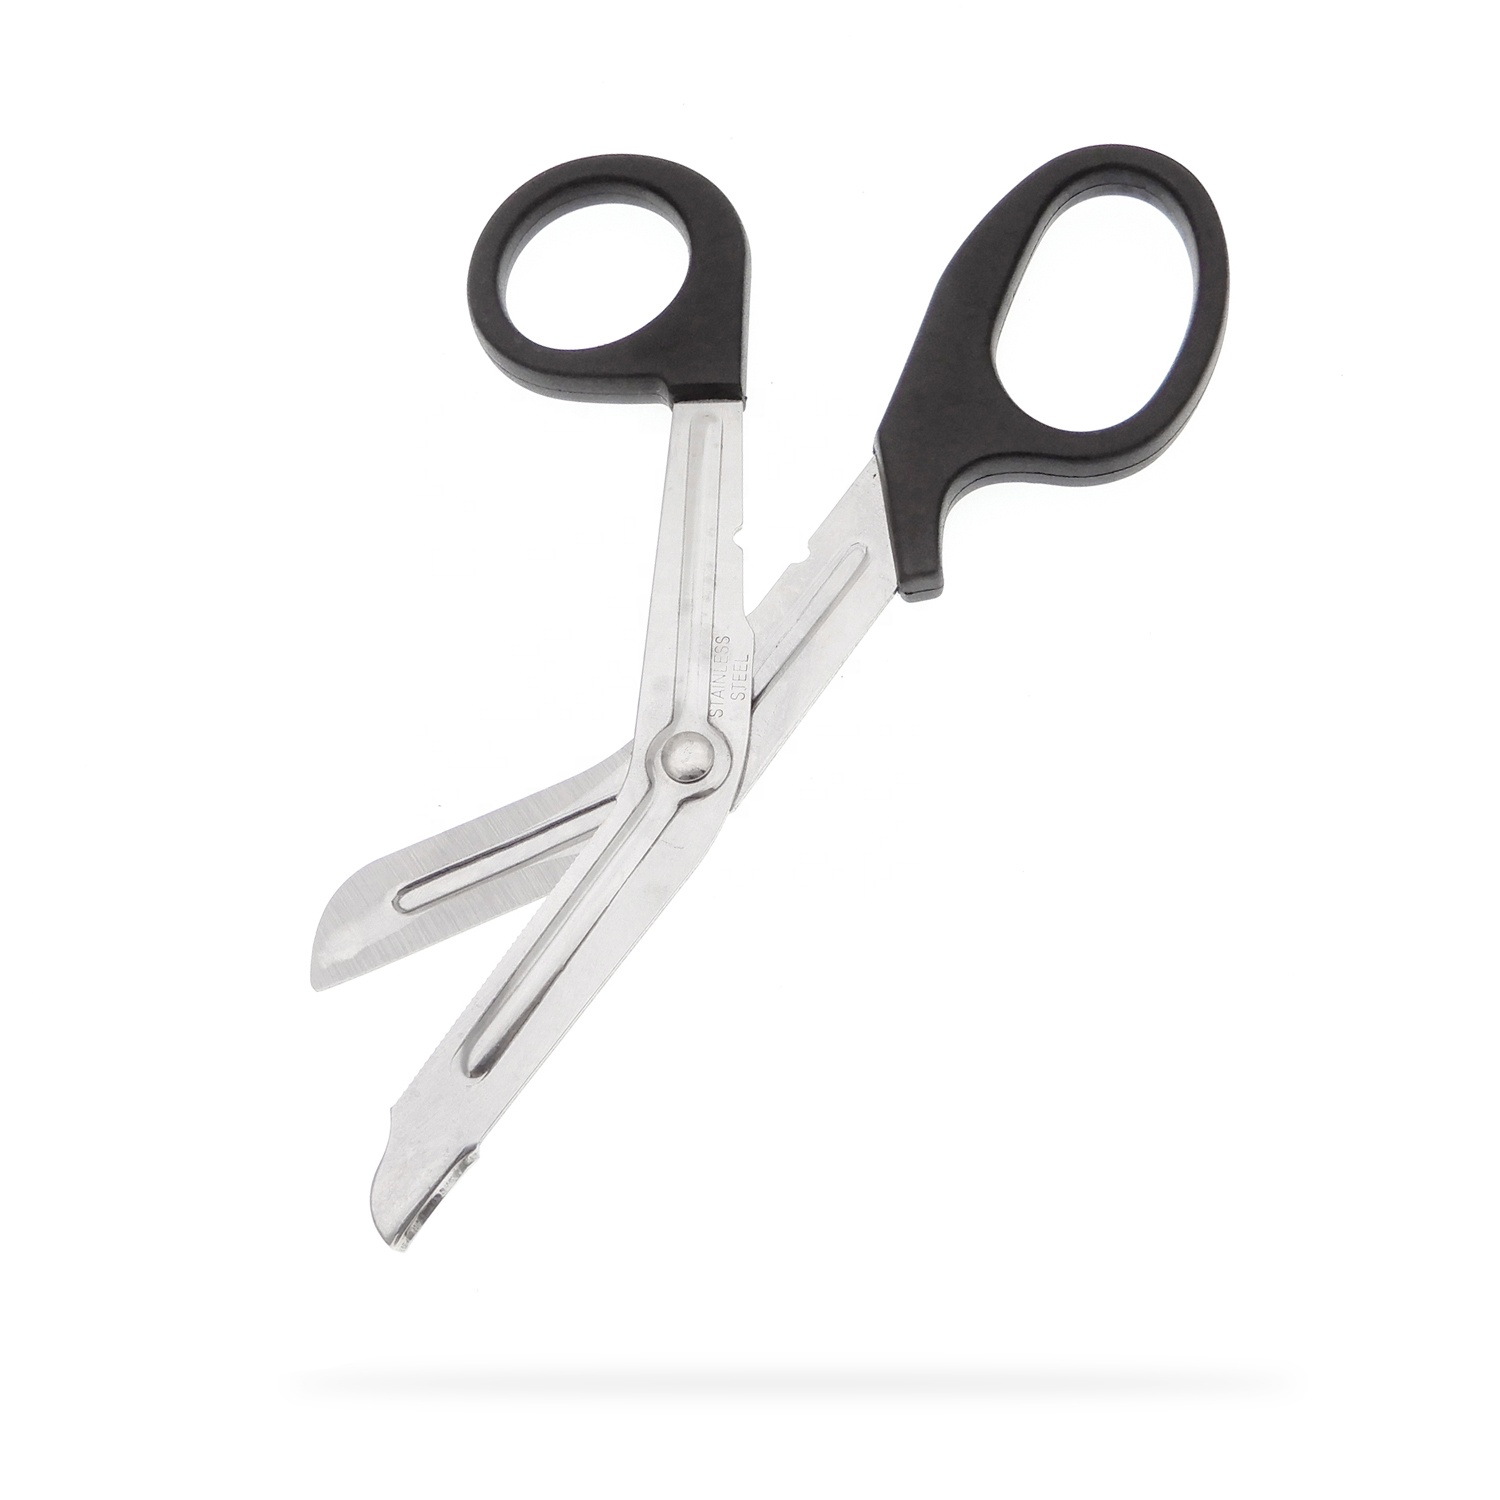 SA-004 Bend Scissors Black Bandage Scissor Household Stainless Steel Shears Safety Emergency Kits Home Improvement Scissors
